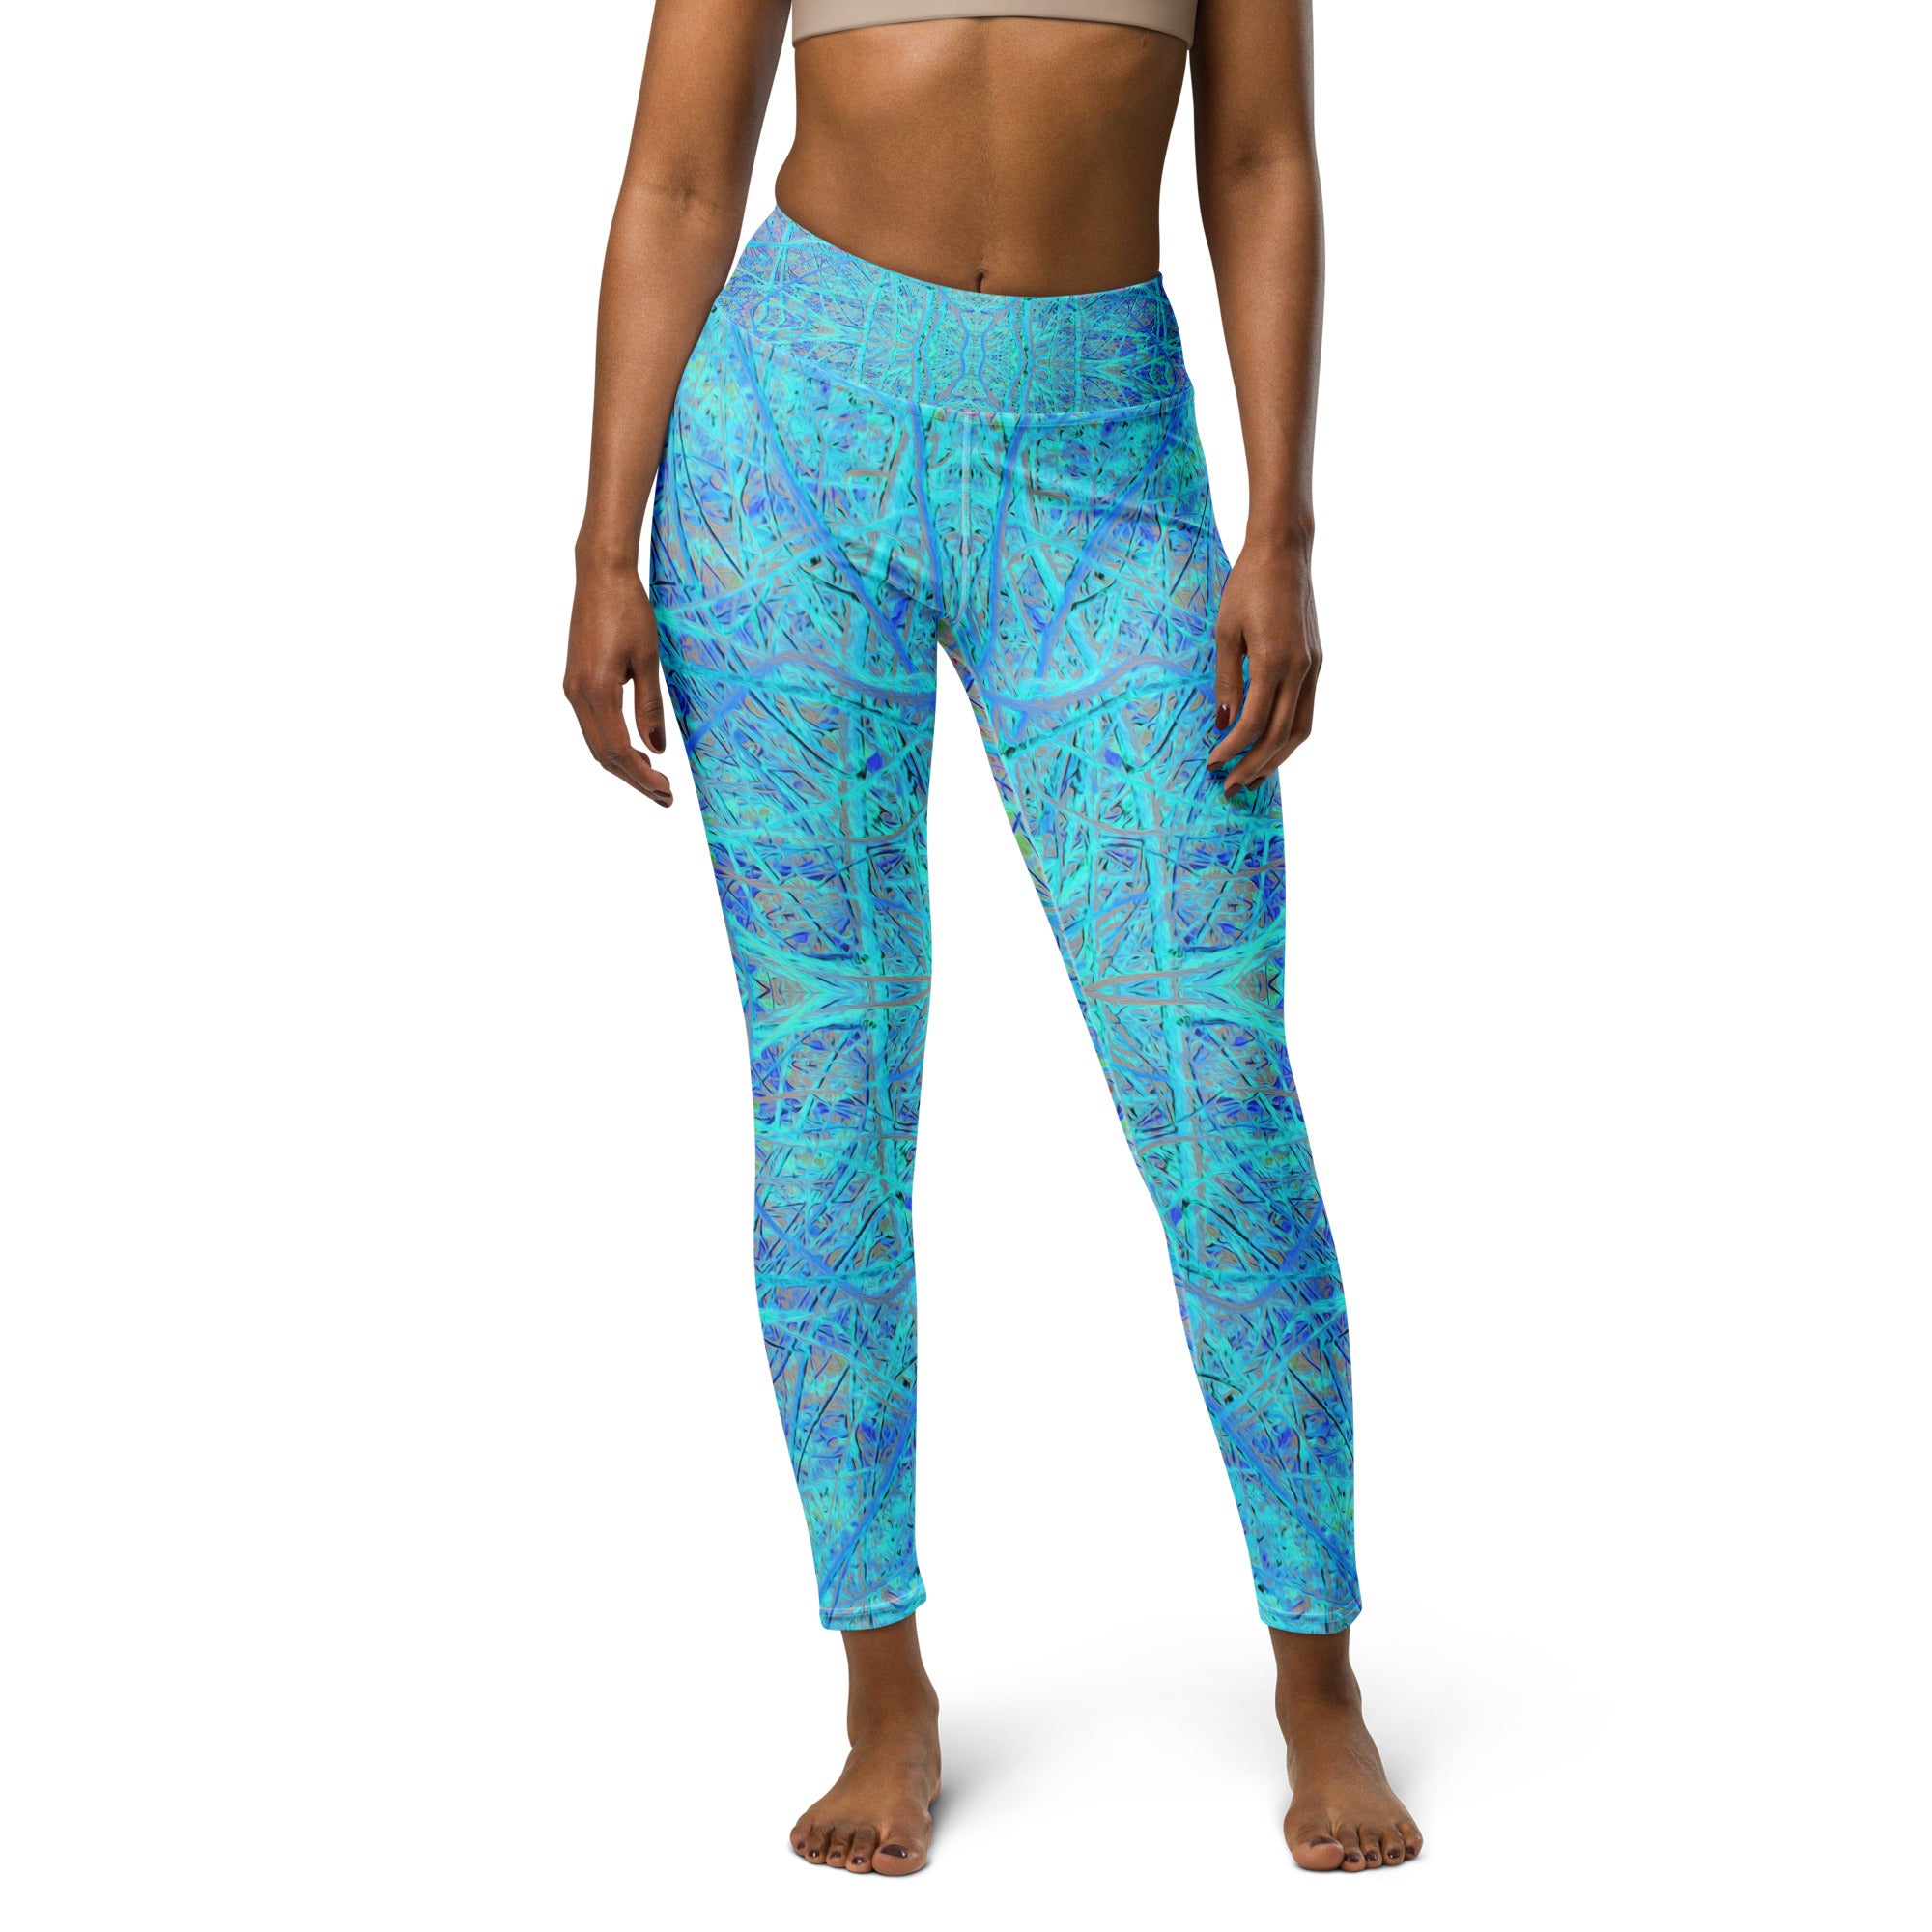 Yoga Leggings for Women - Cool Aqua Blue Abstract Branch Pattern